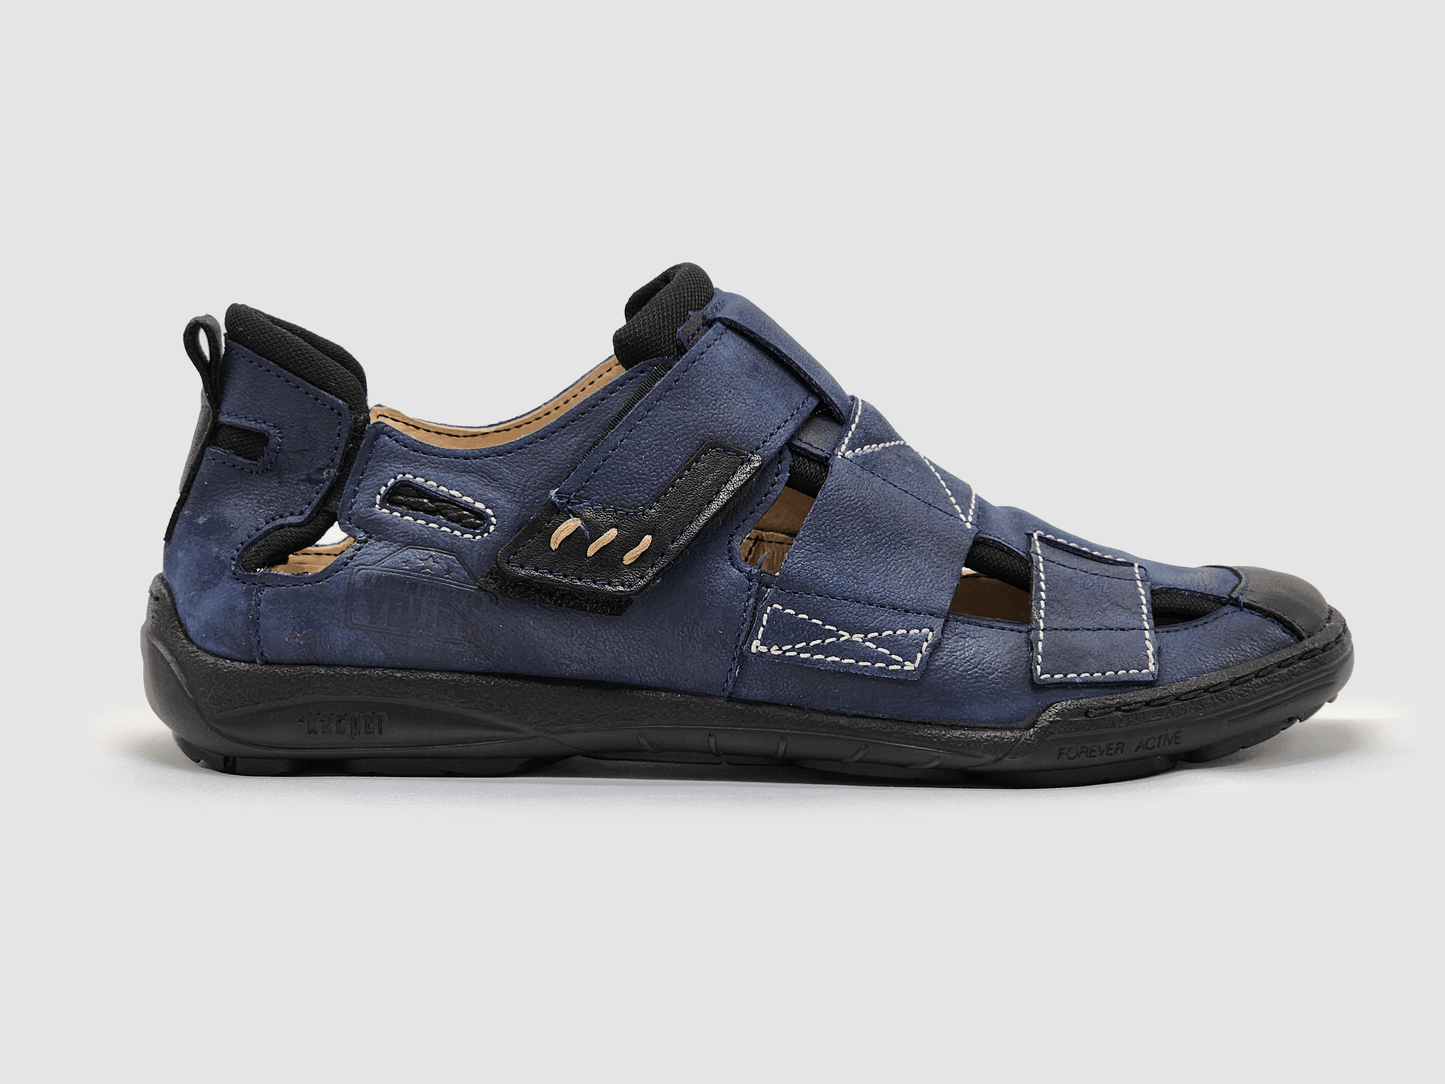 Men's Leather Sandals - Blue - Kacper Global Shoes 